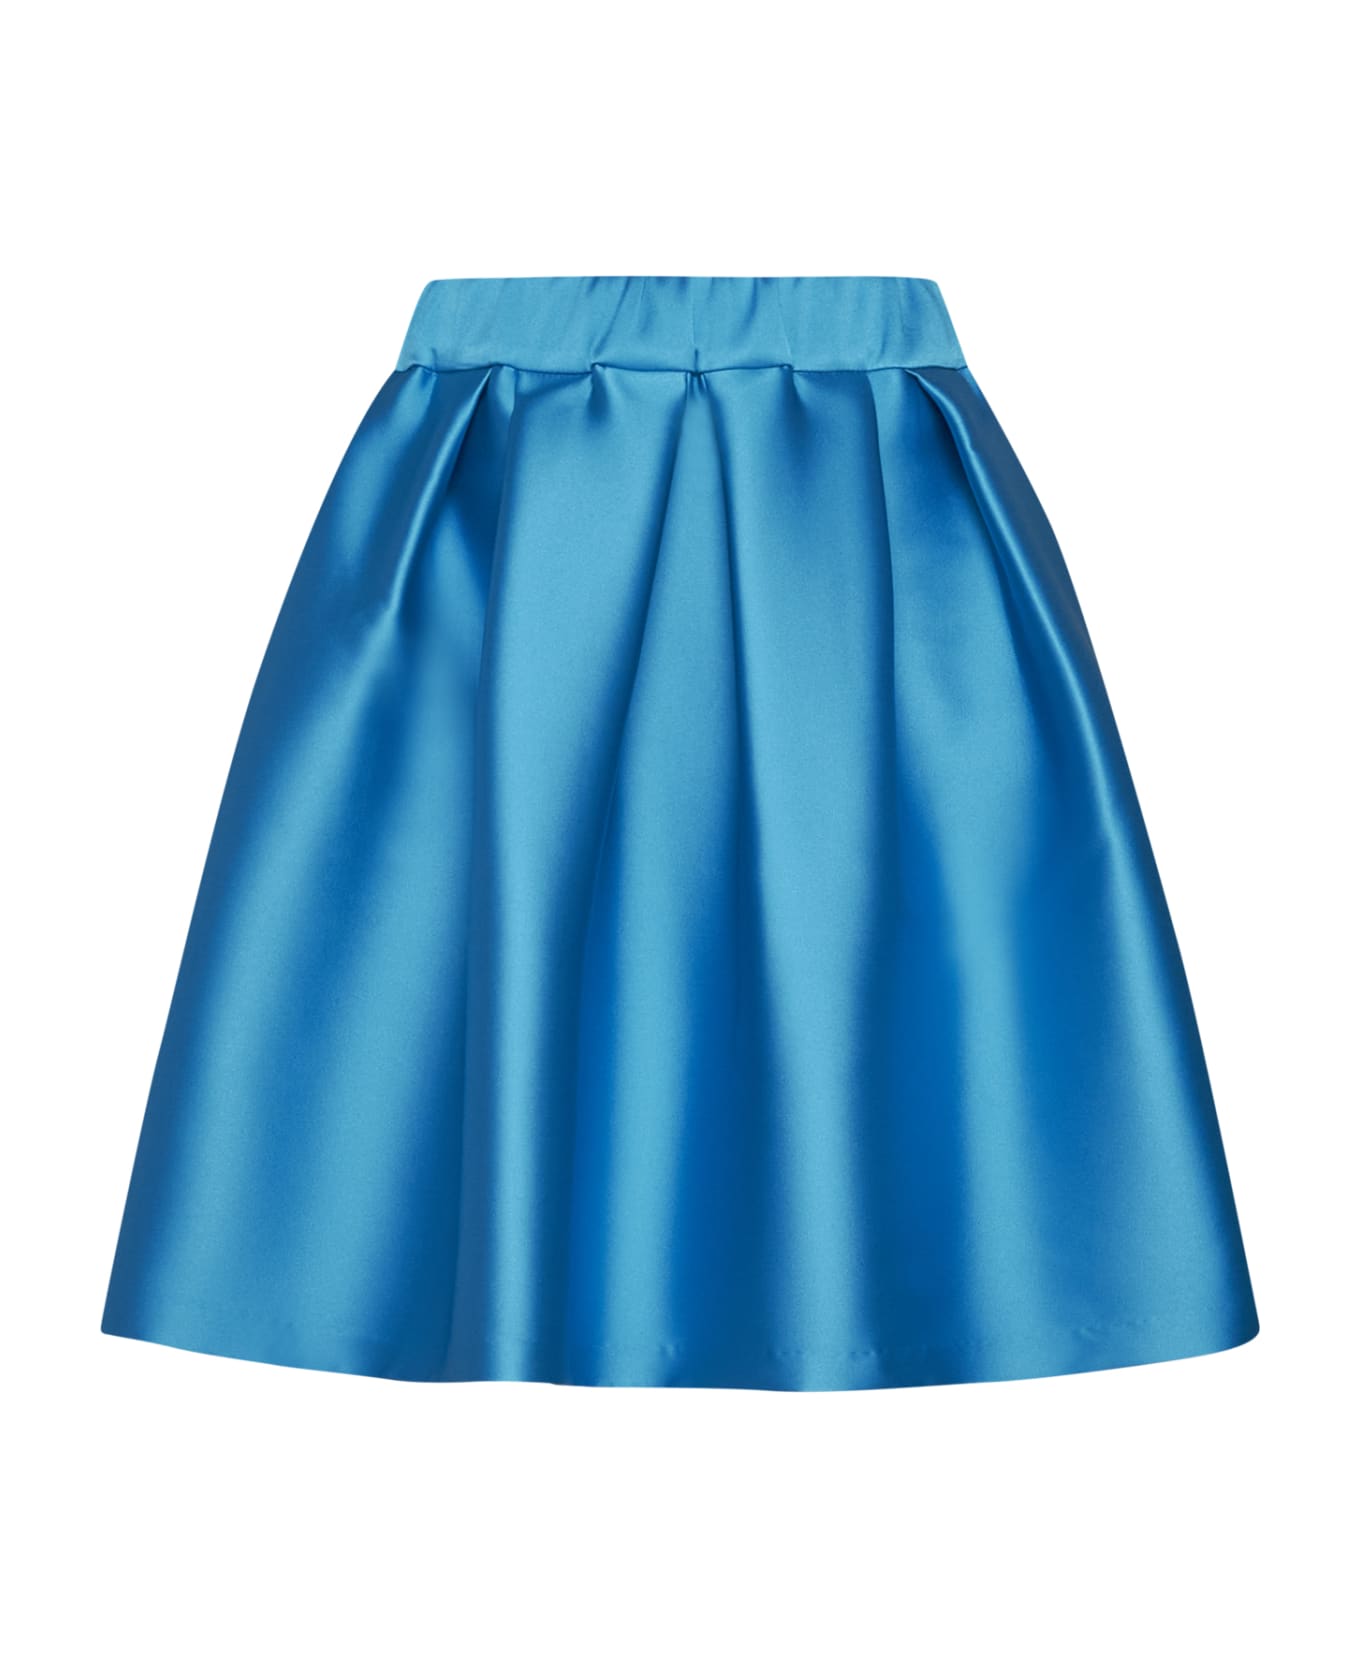 Parosh Skirt - Turquoise